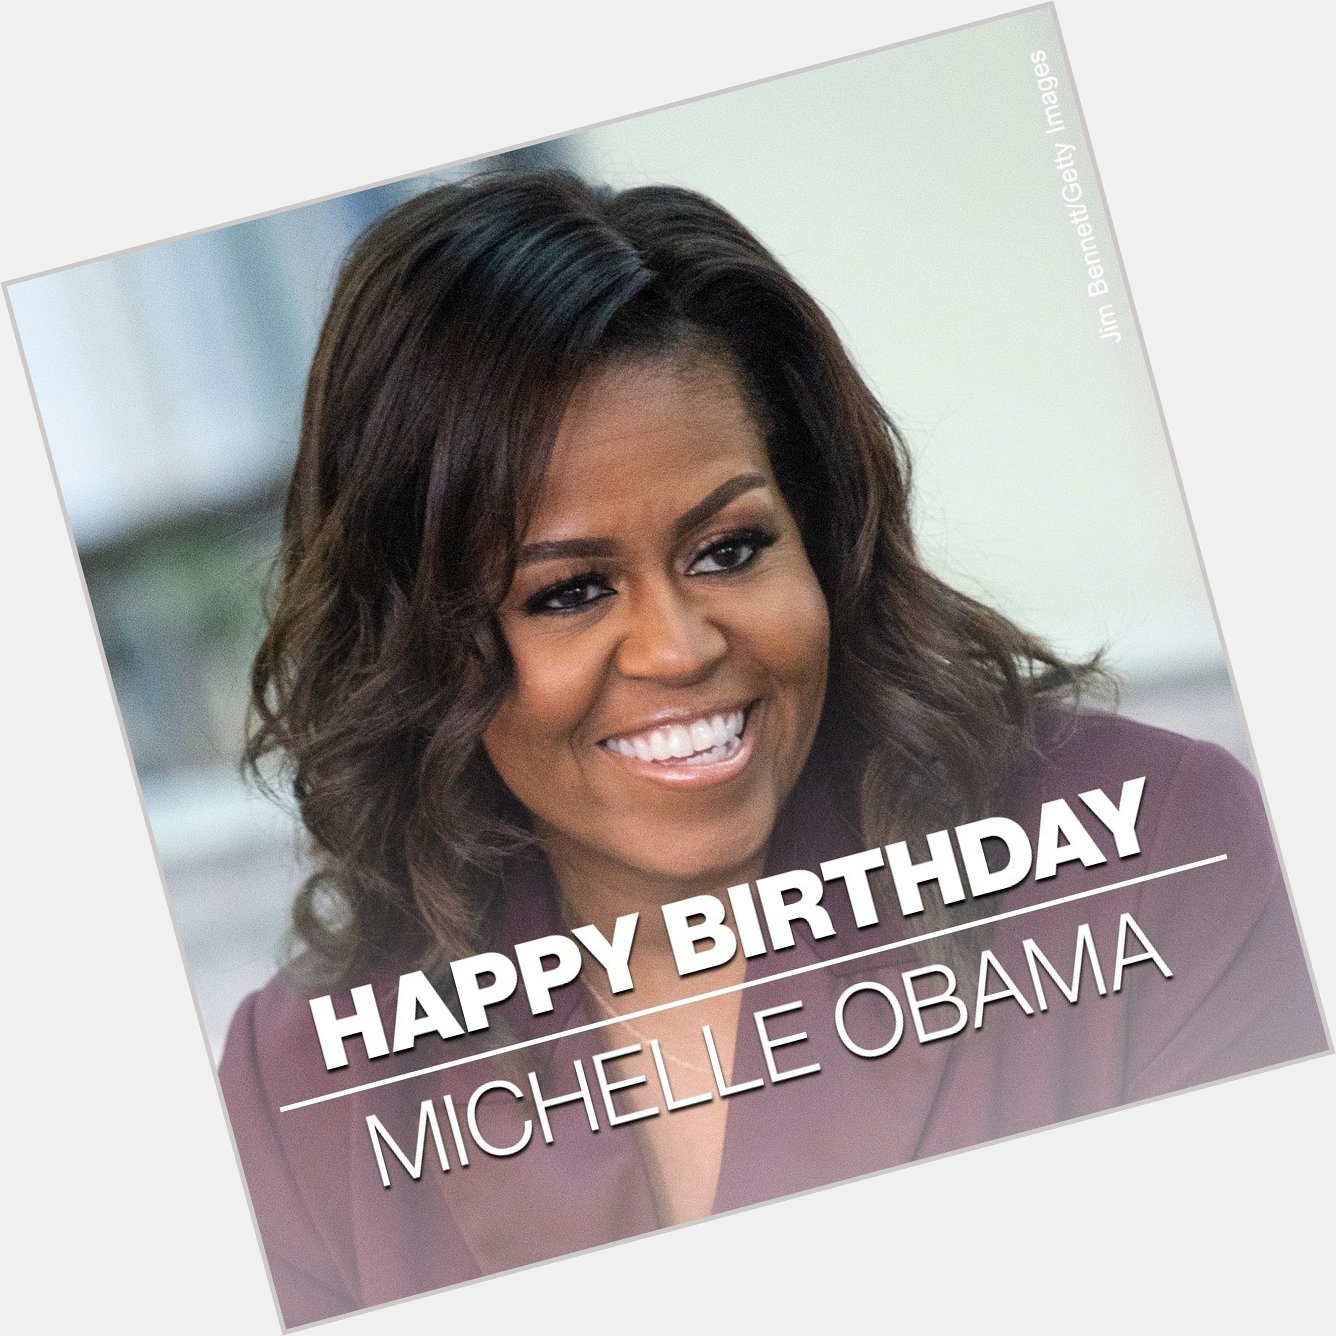 HAPPY BIRTHDAY. Former First Lady Michelle Obama celebrates her birthday today! 